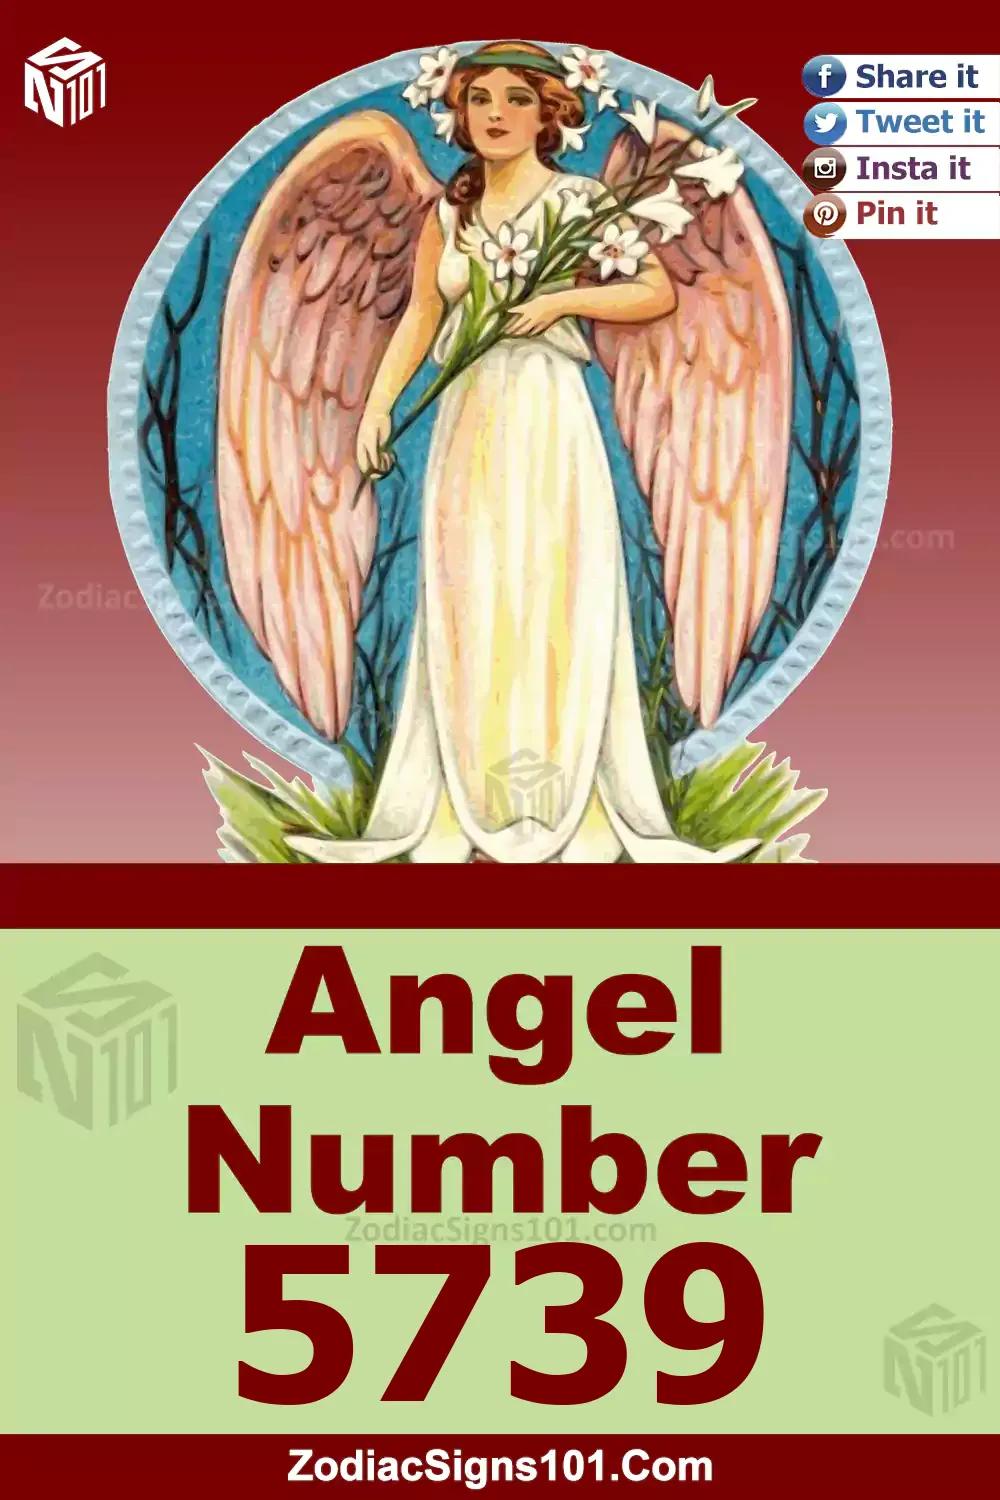 5739-Angel-Number-Meaning.jpg